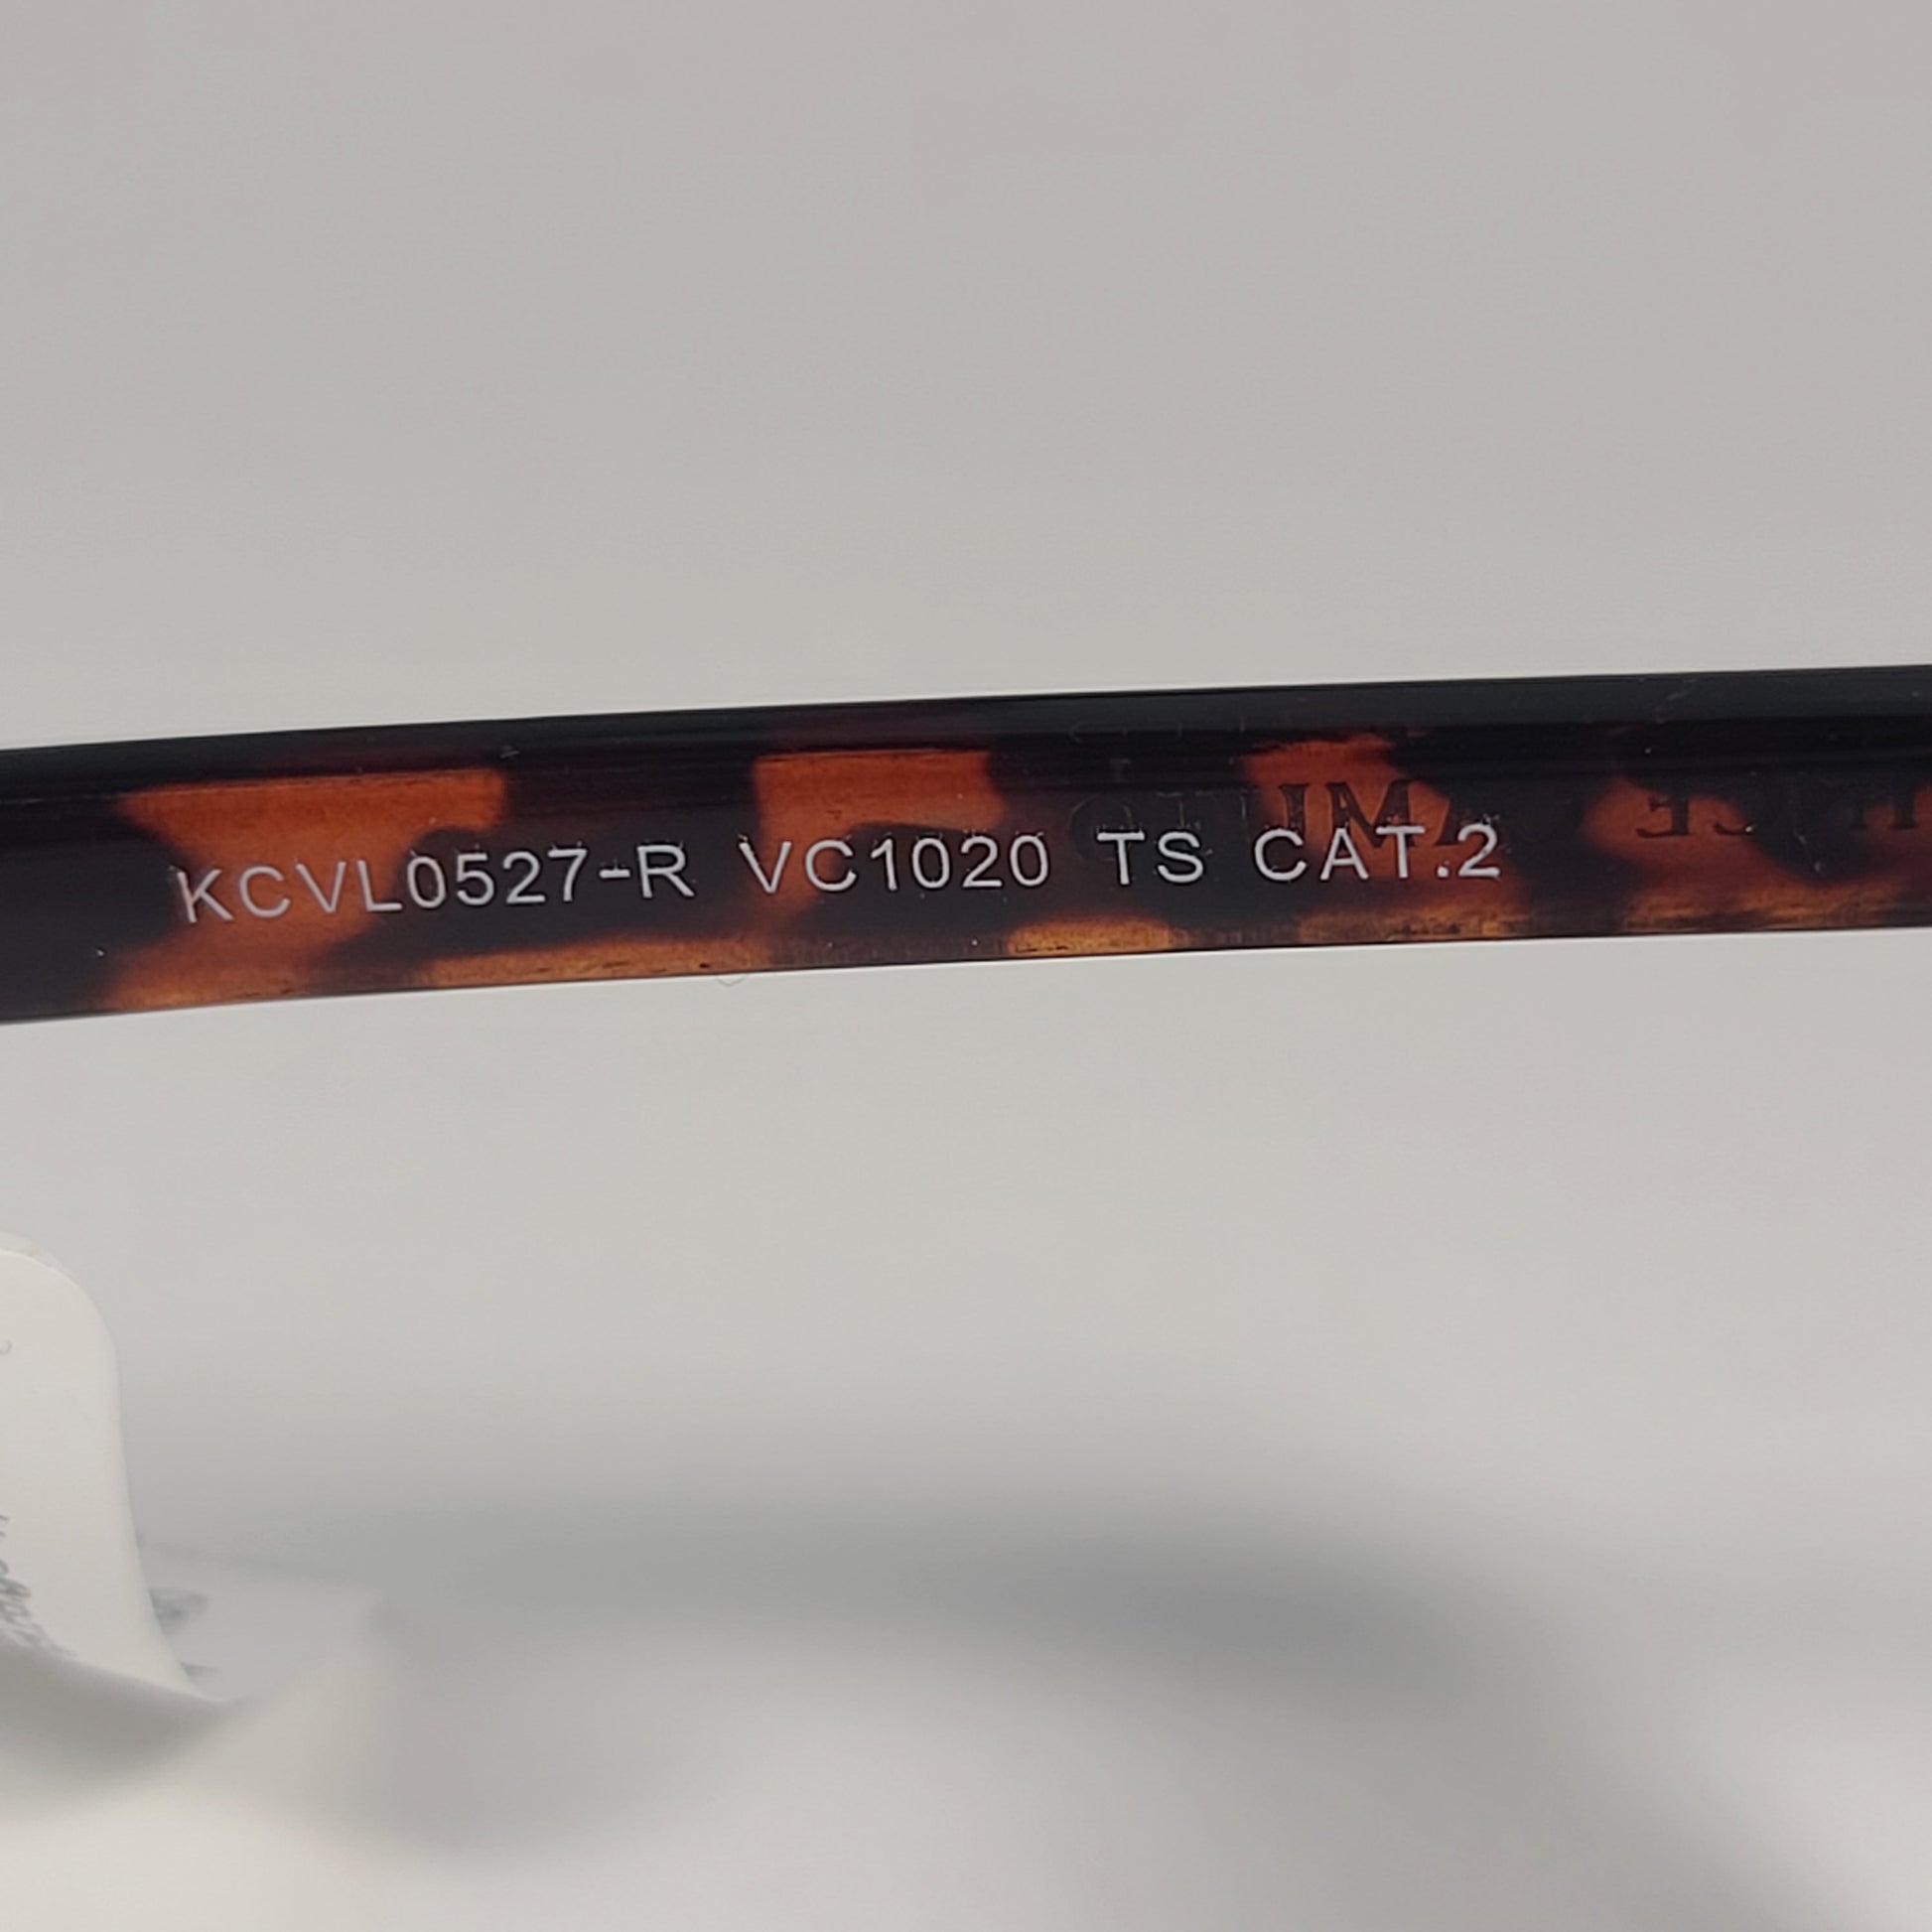 Vince Camuto VC1020 TS Oversize Cat Eye Sunglasses Tortoise Brown Gradient Lens - Sunglasses